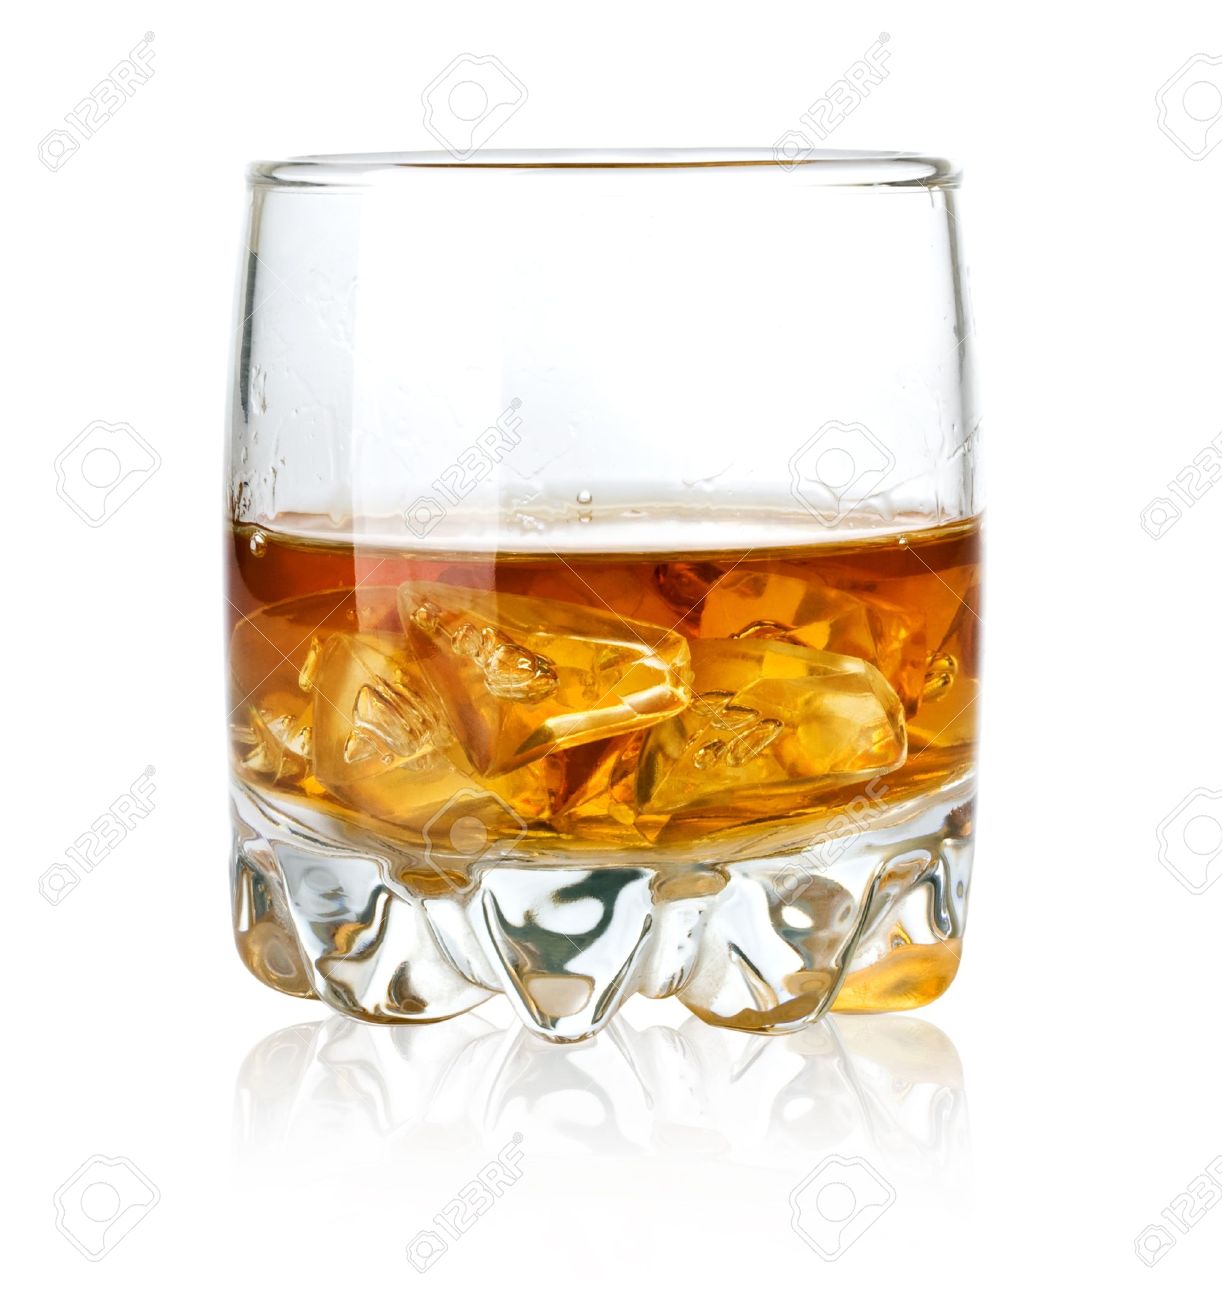 12458535-Whisky-glass-and-ice-isolated-on-white-background-Stock-Photo-whiskey.jpg